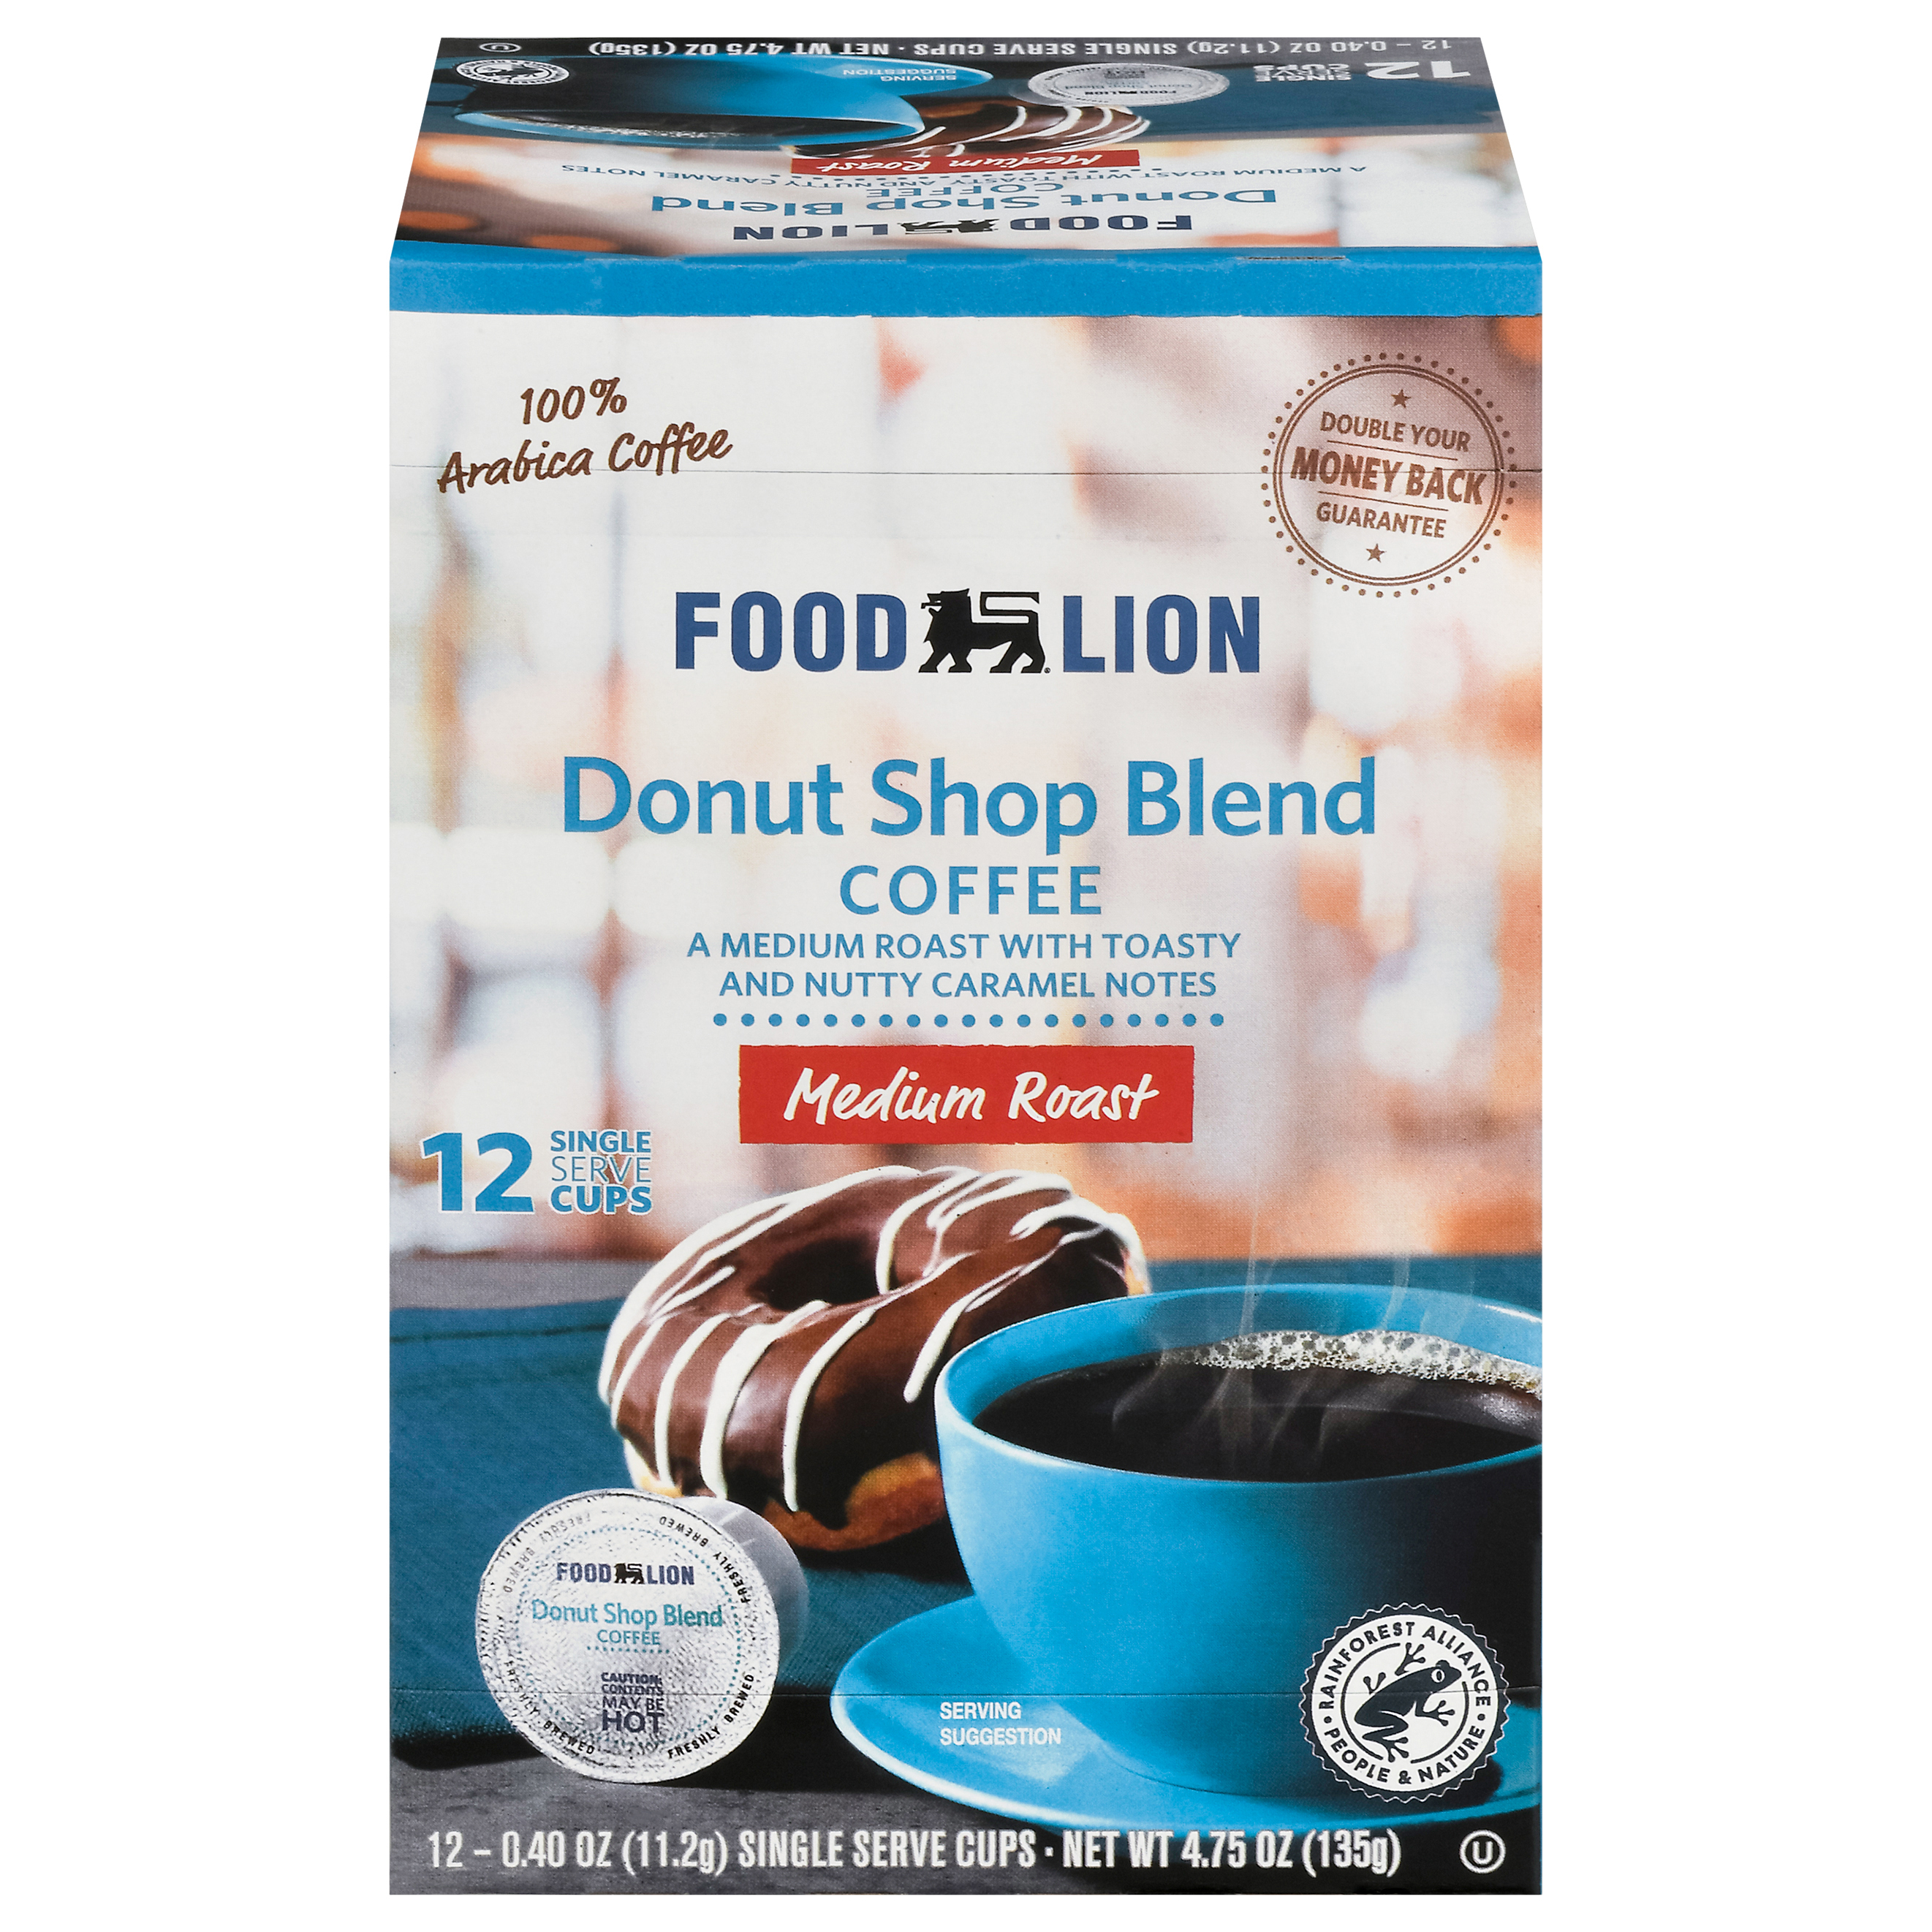 Lion Coffee, Medium Roast, Original Roast, Cups - 12 pack, 0.38 oz cups